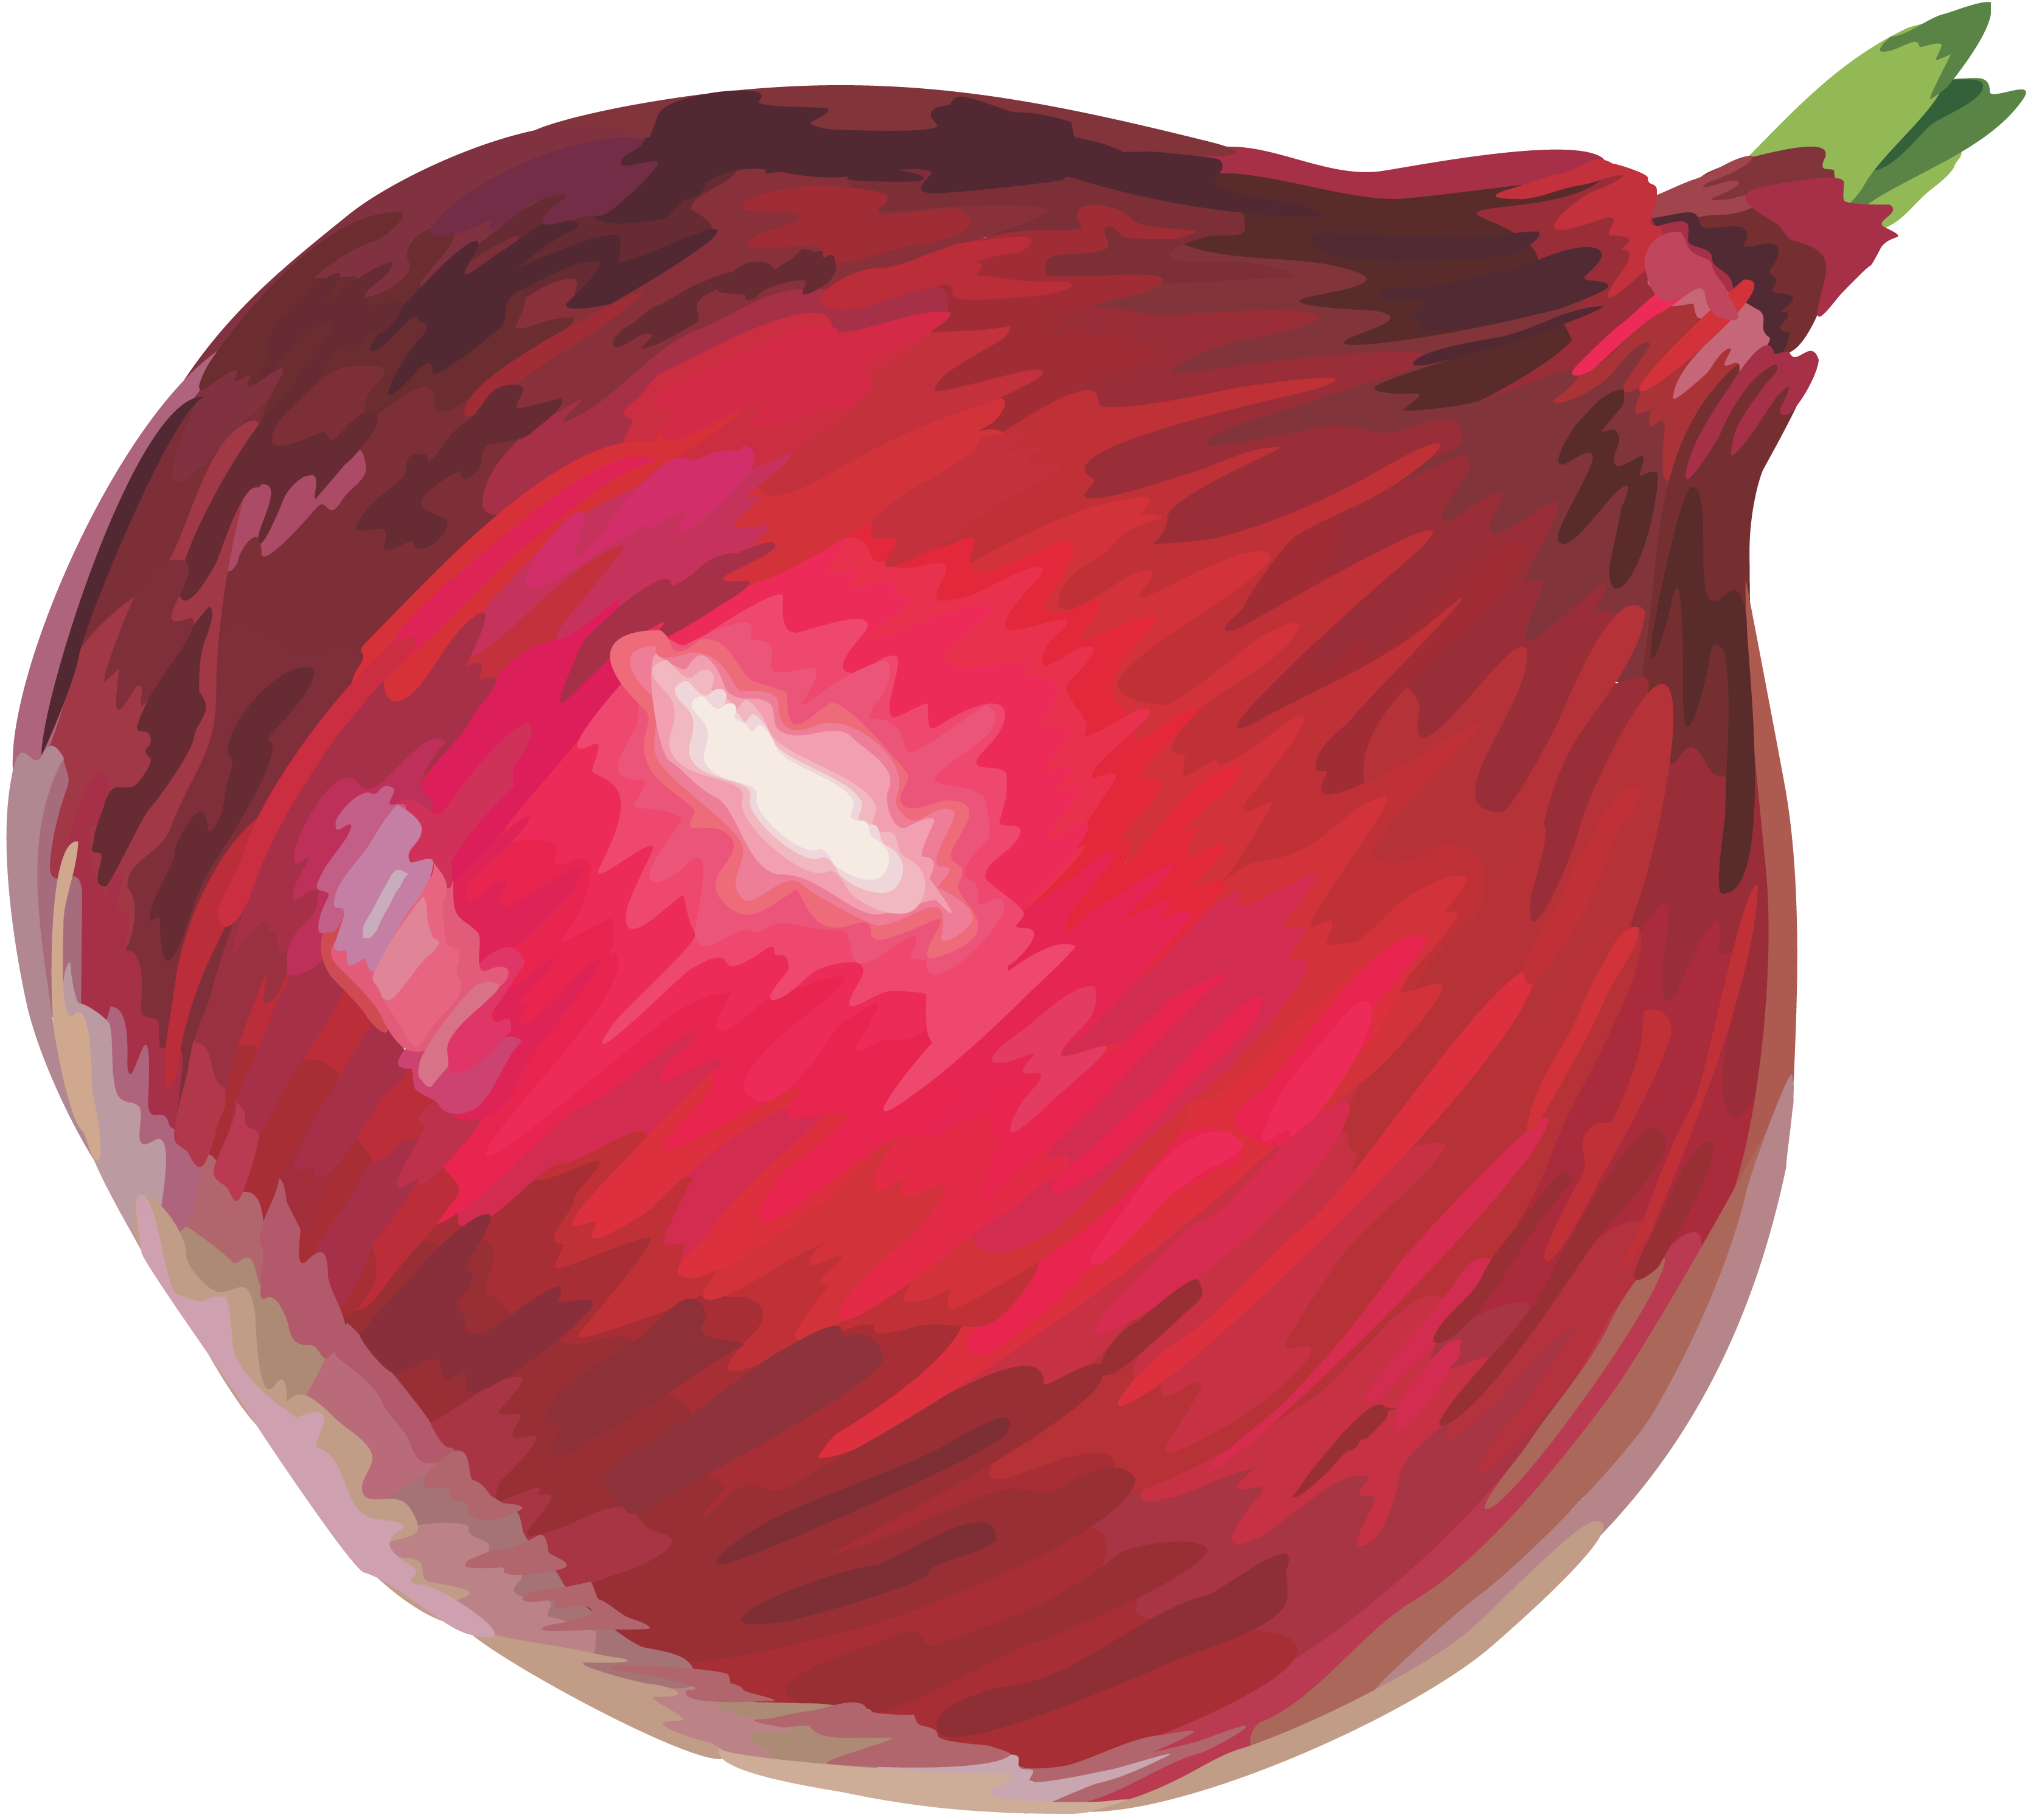 Cipolla rossa